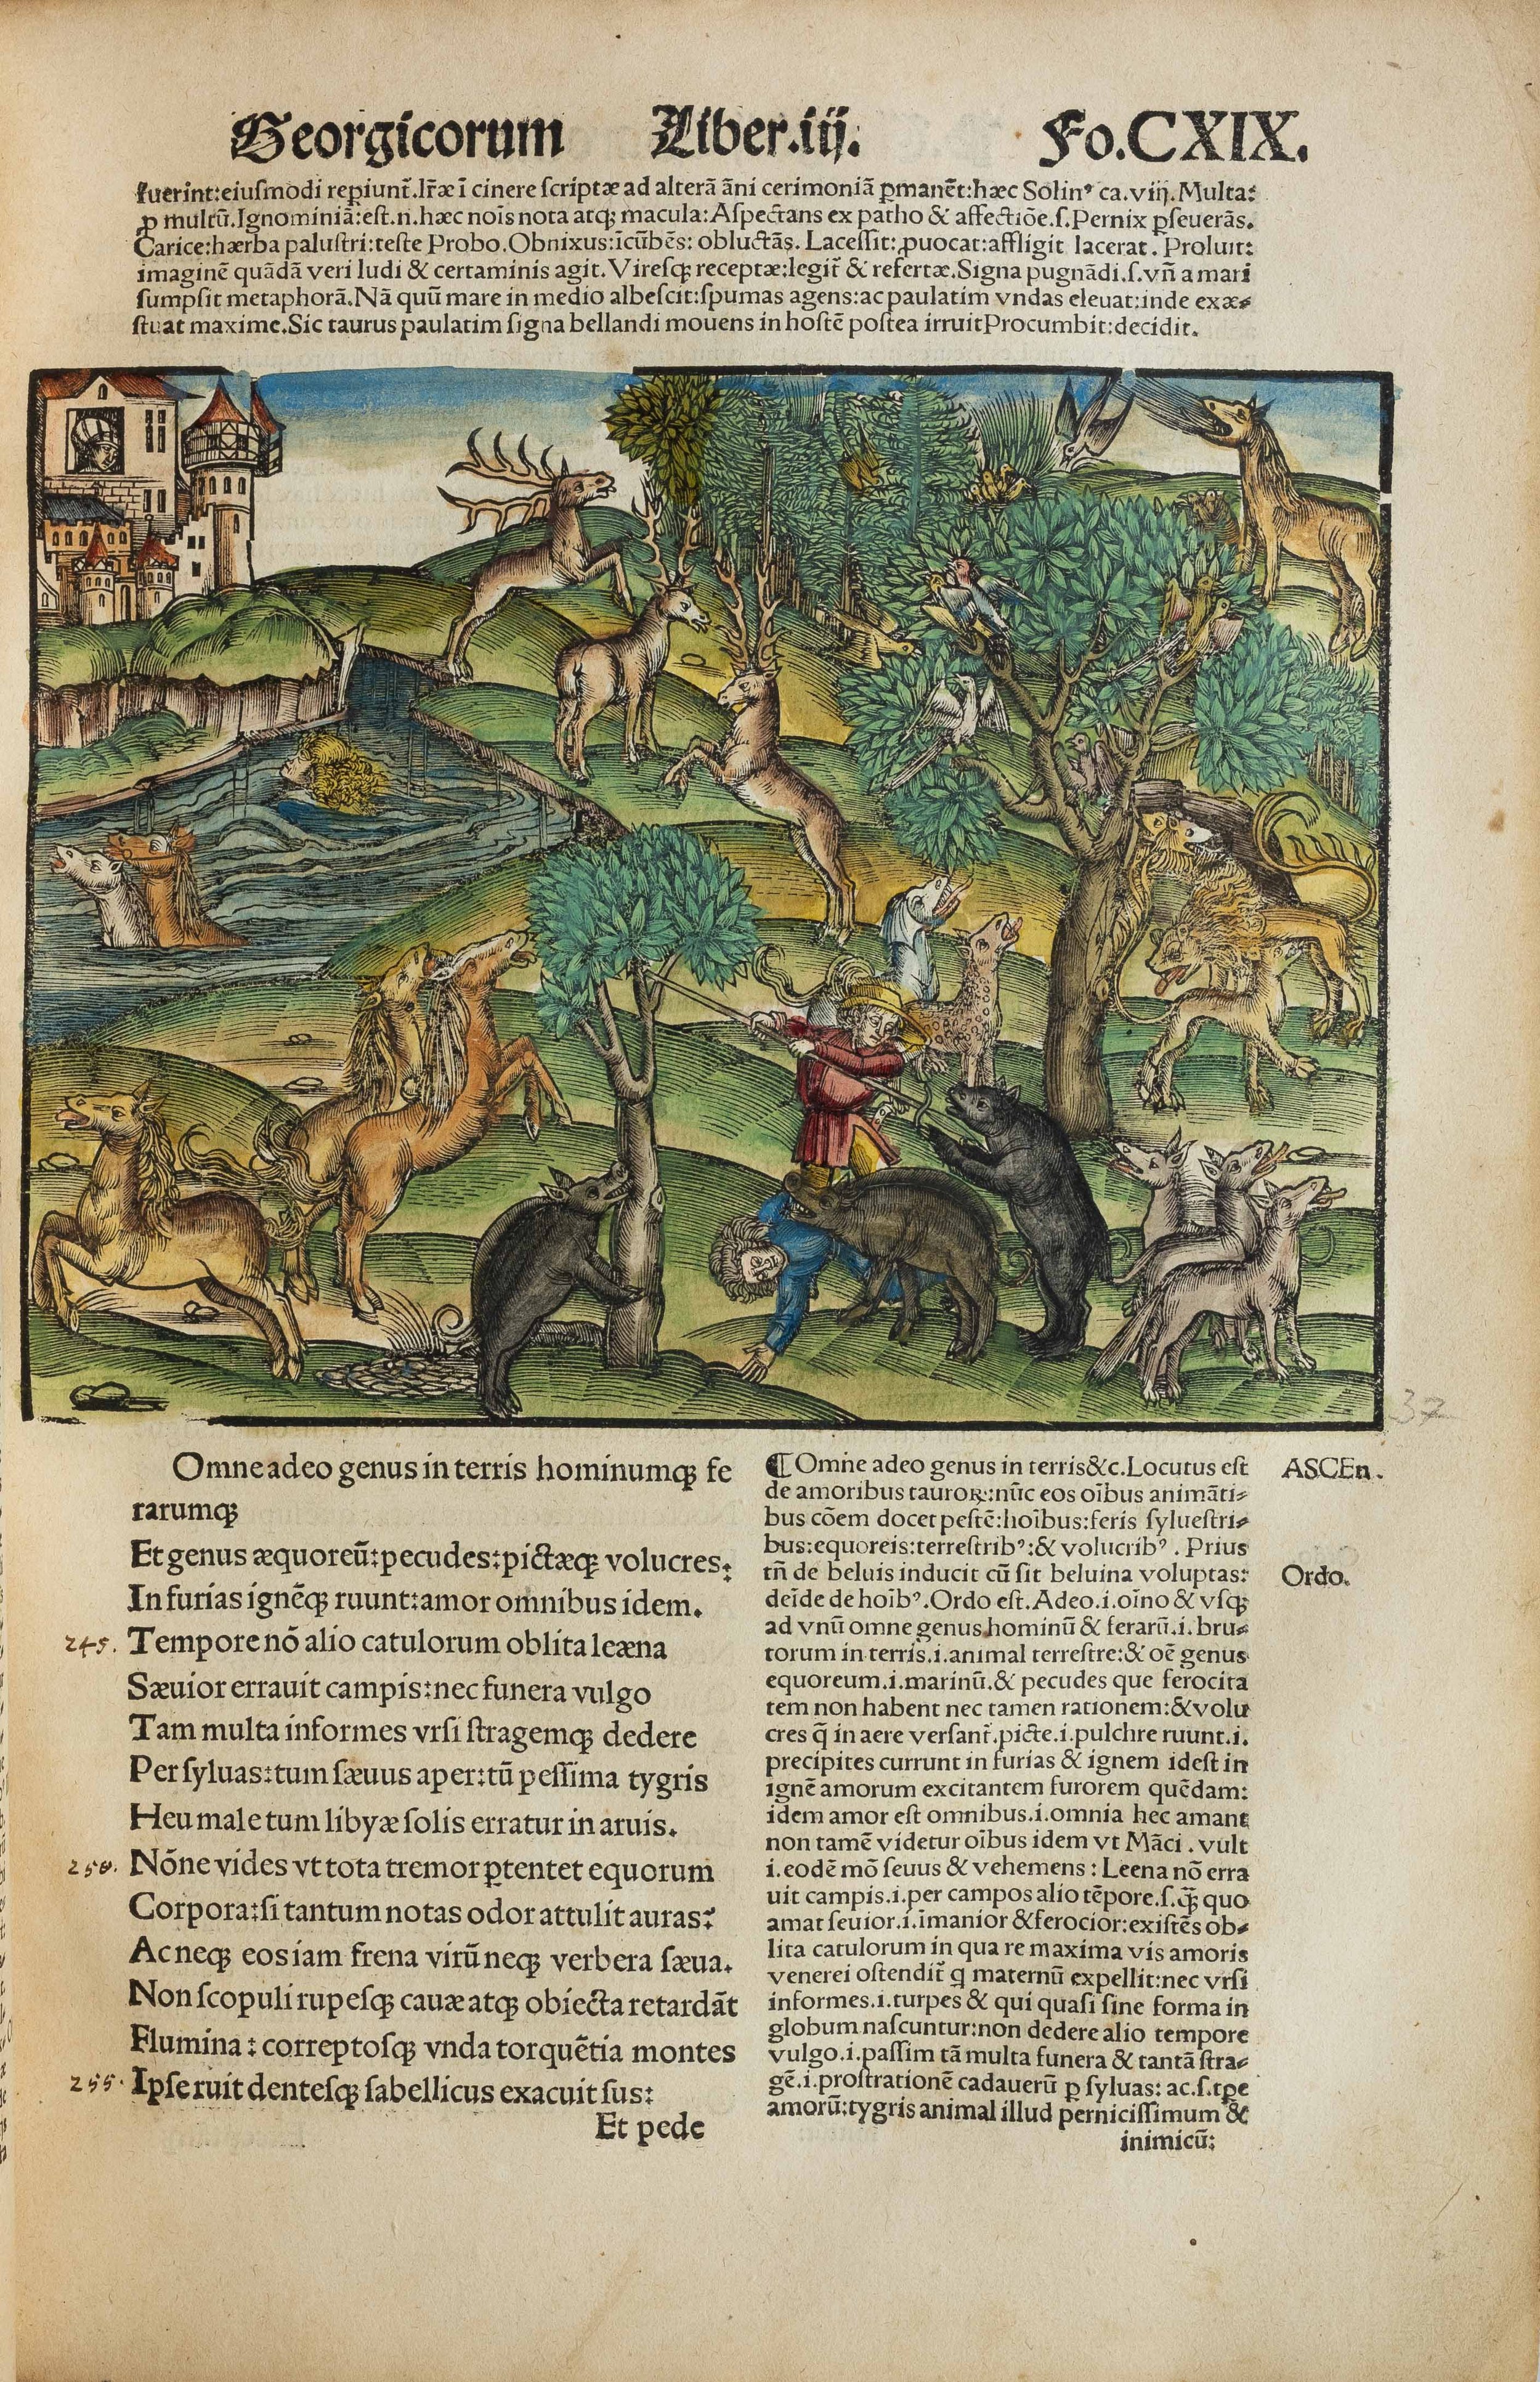 vergil-opera-1517-lyon-hand-coloured-woodcuts-for-sale-8.jpg